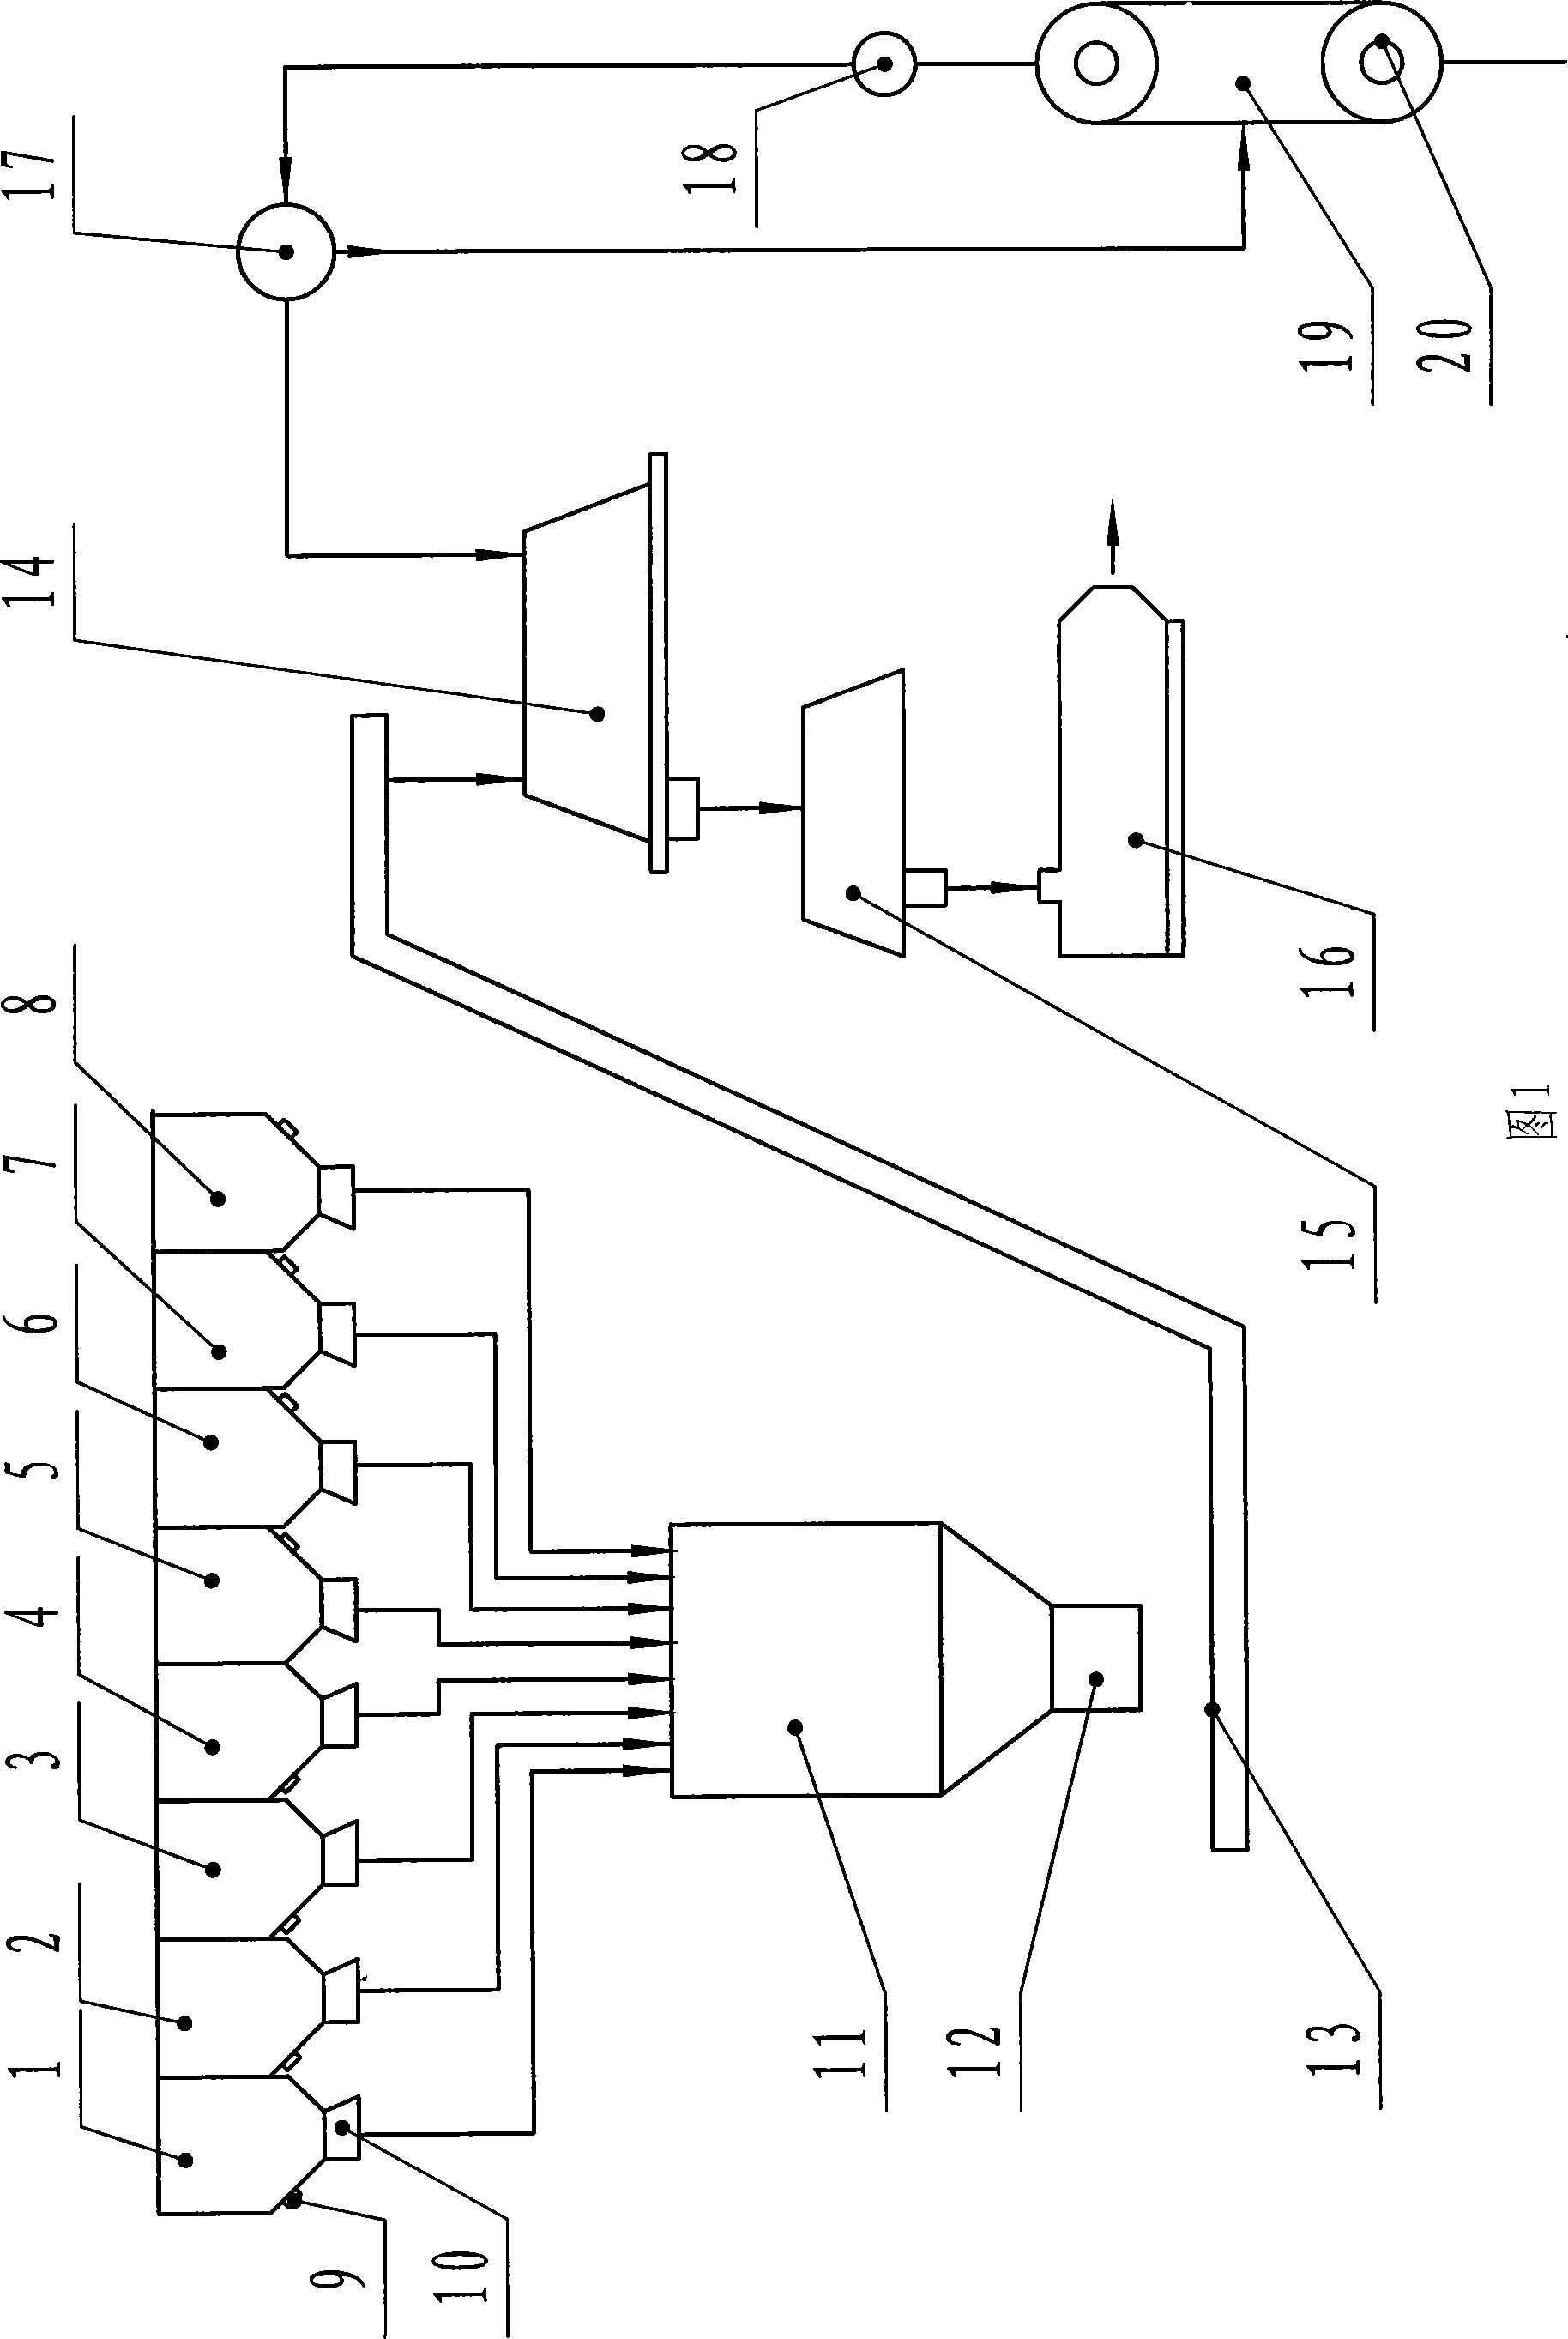 Method for manufacturing blast furnace stemming